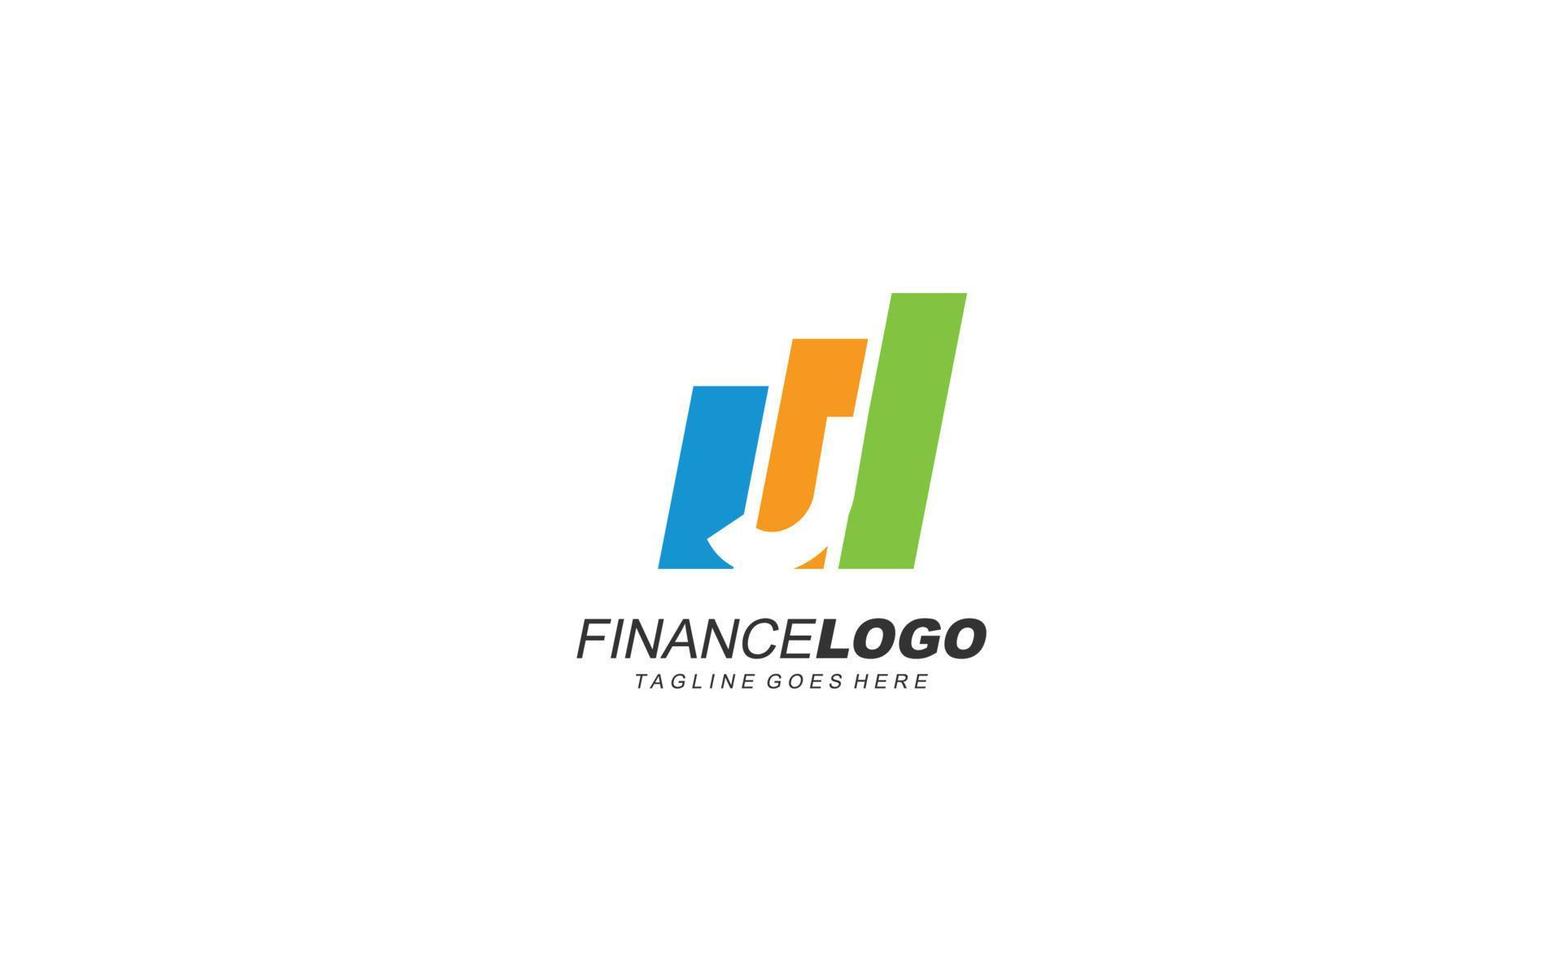 J logo management for company. letter template vector illustration for your brand.